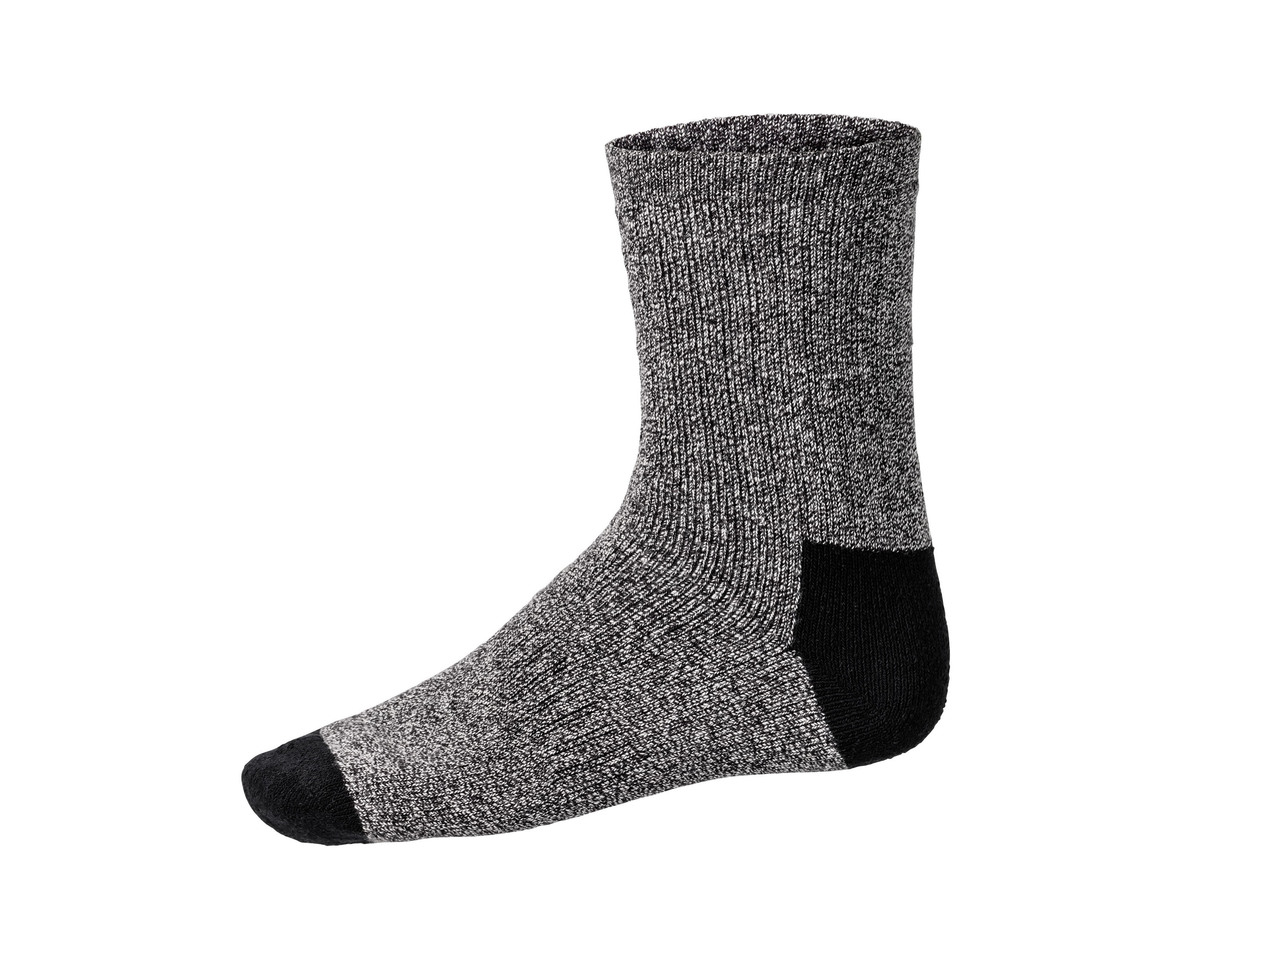 Men's Work Socks, 2 pairs